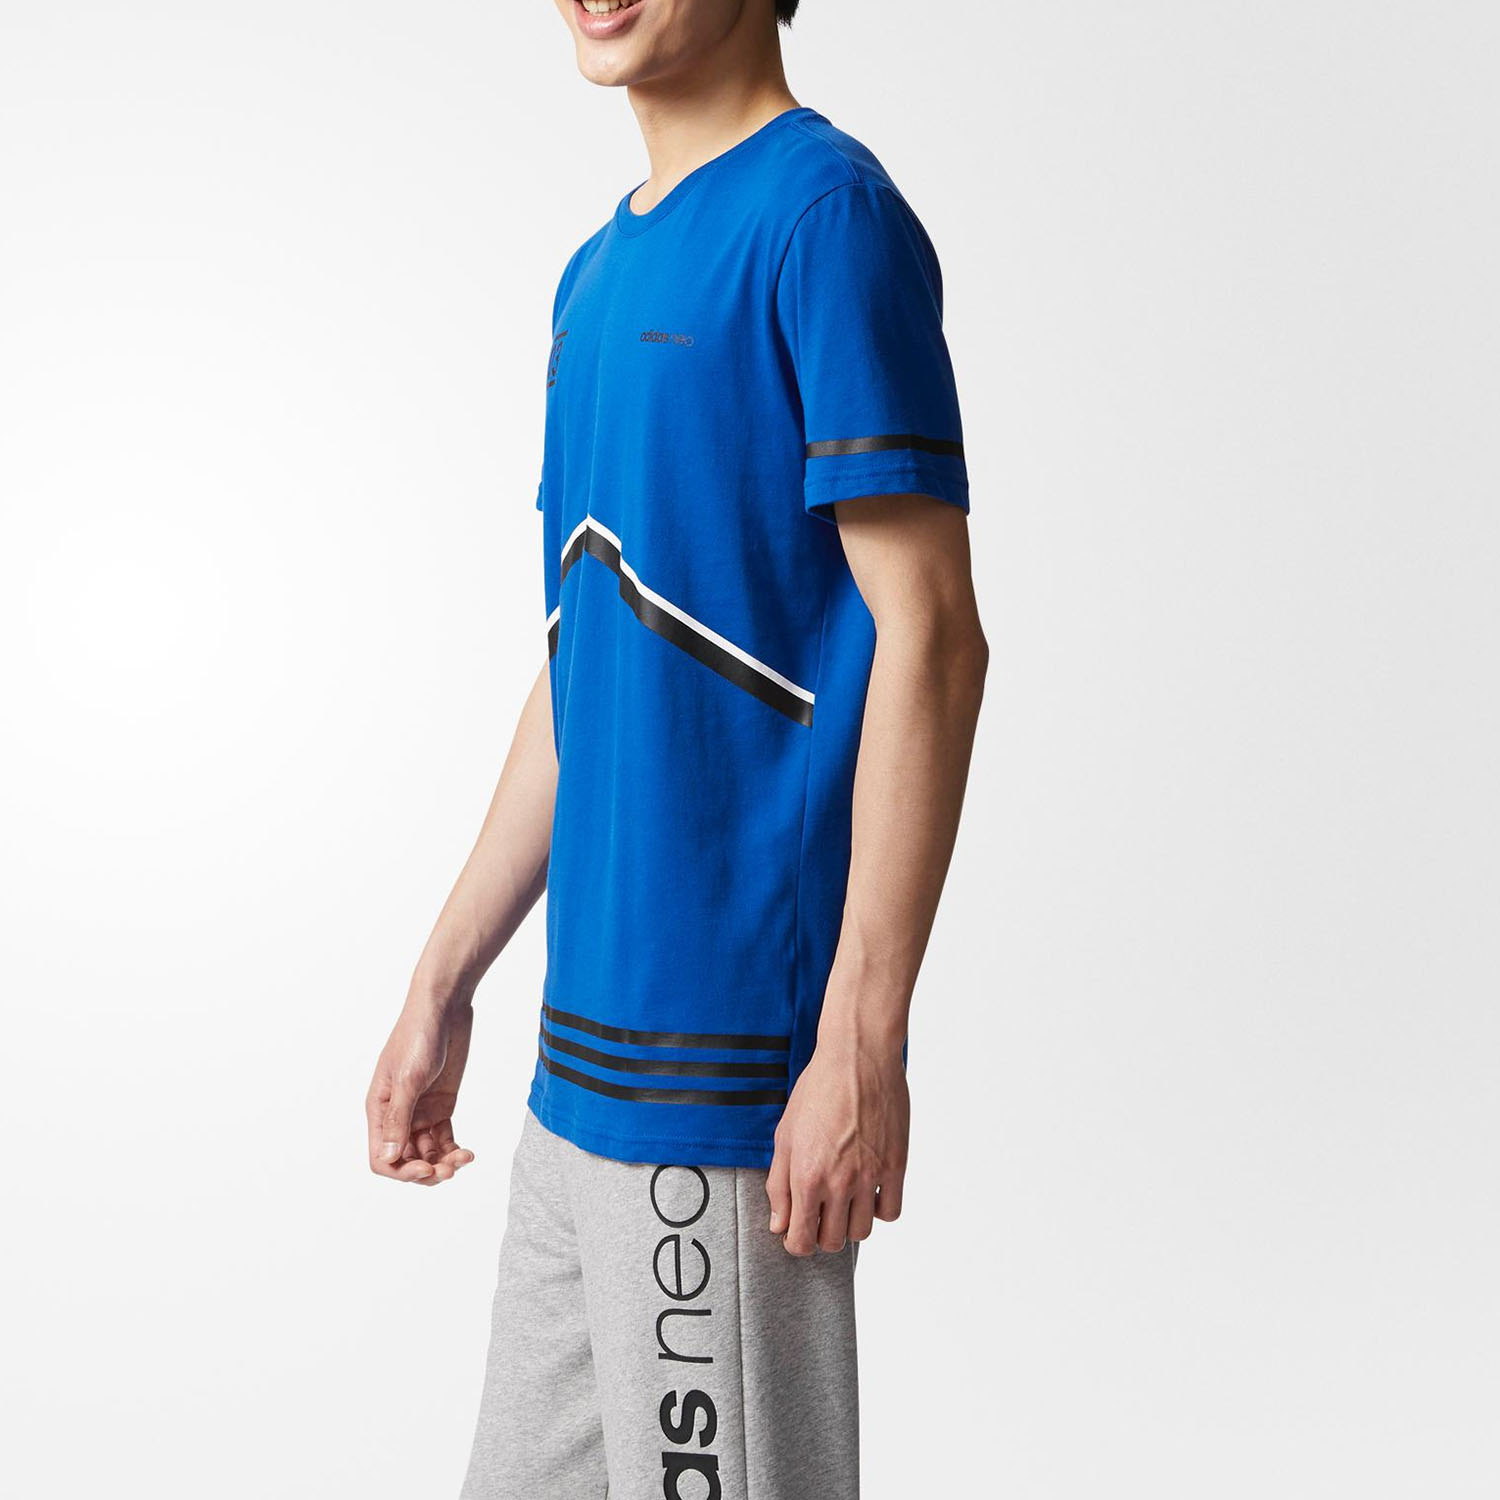 Adidas/阿迪达斯正品秋季男子圆领透气休闲短袖运动T恤BR3675 - 图1